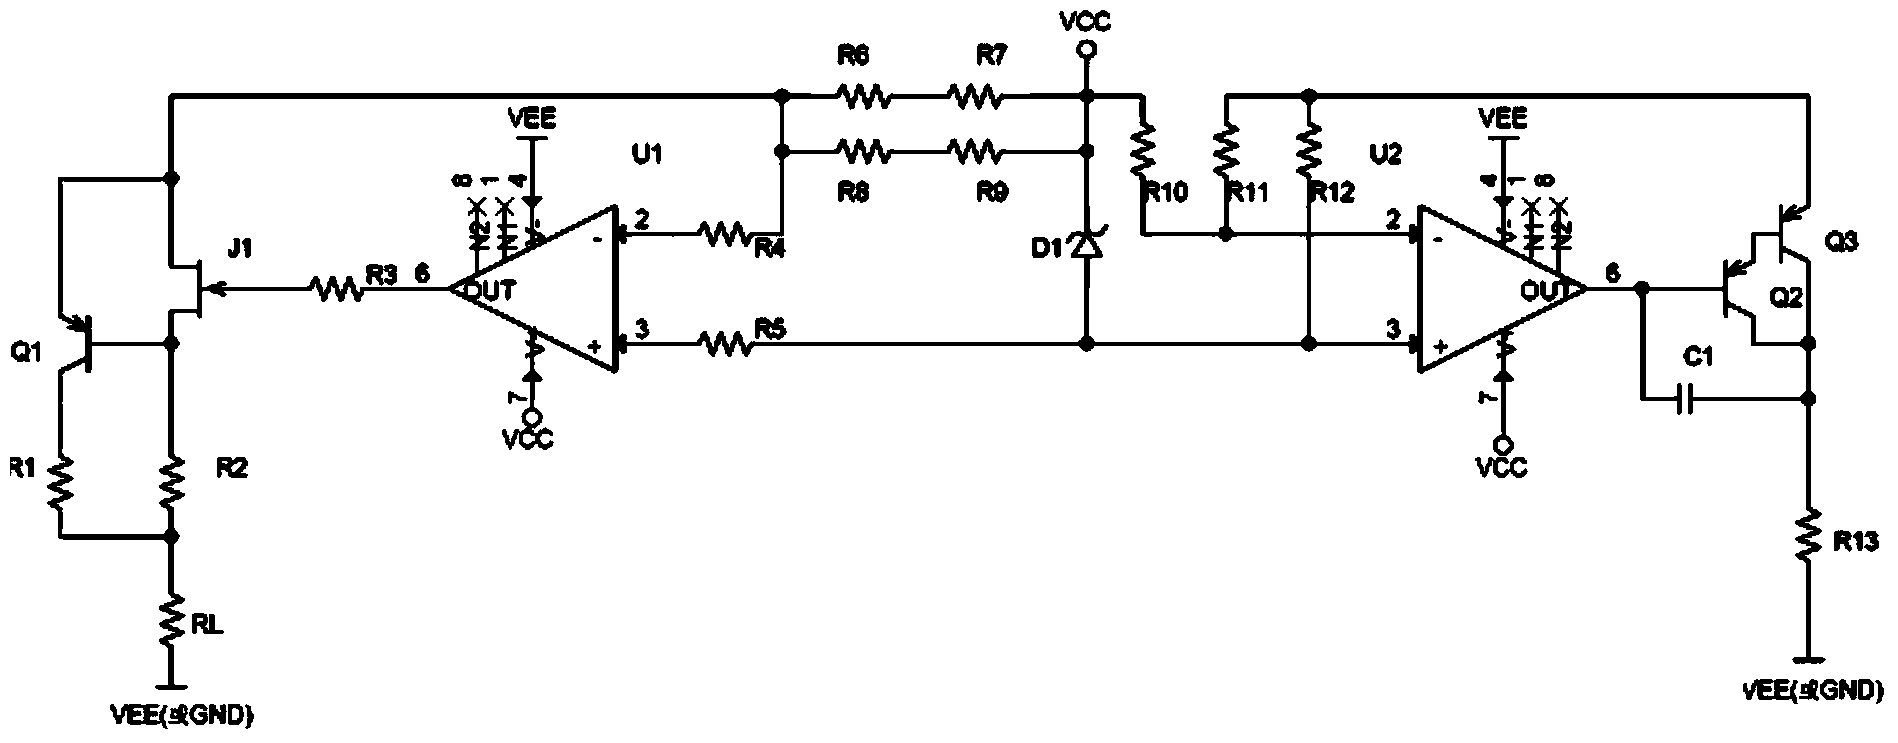 Constant-current source circuit